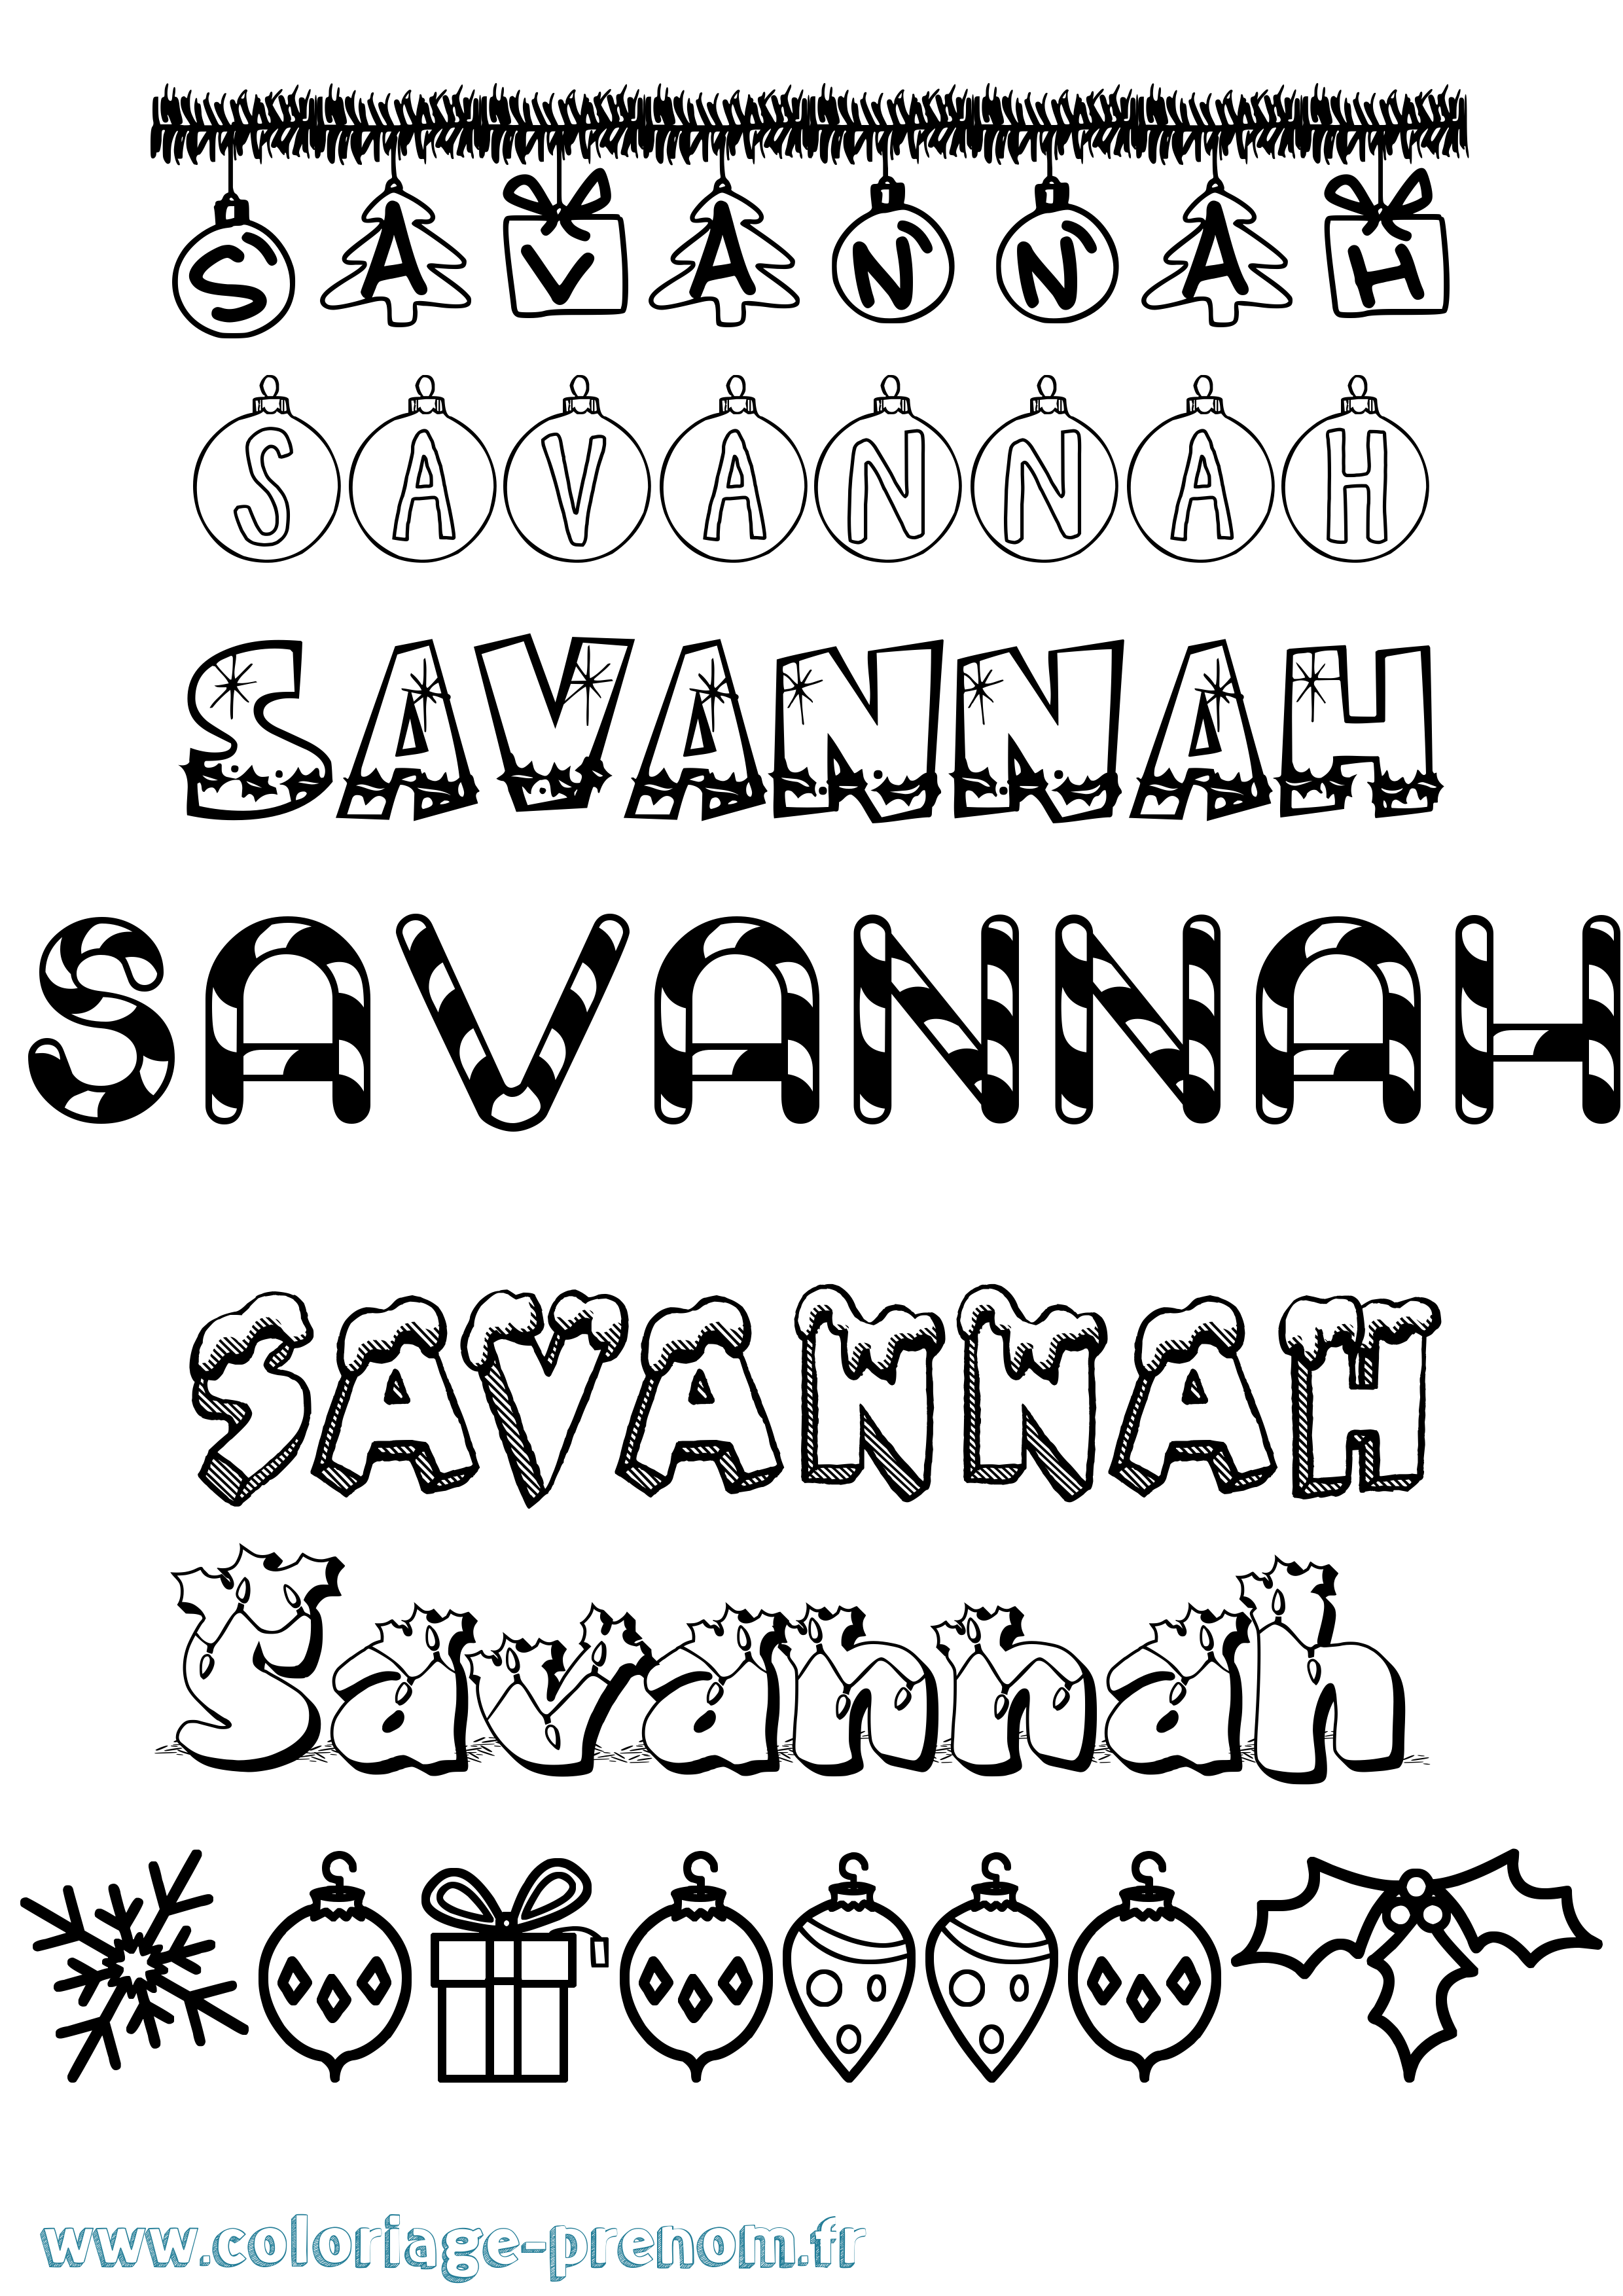 Coloriage prénom Savannah